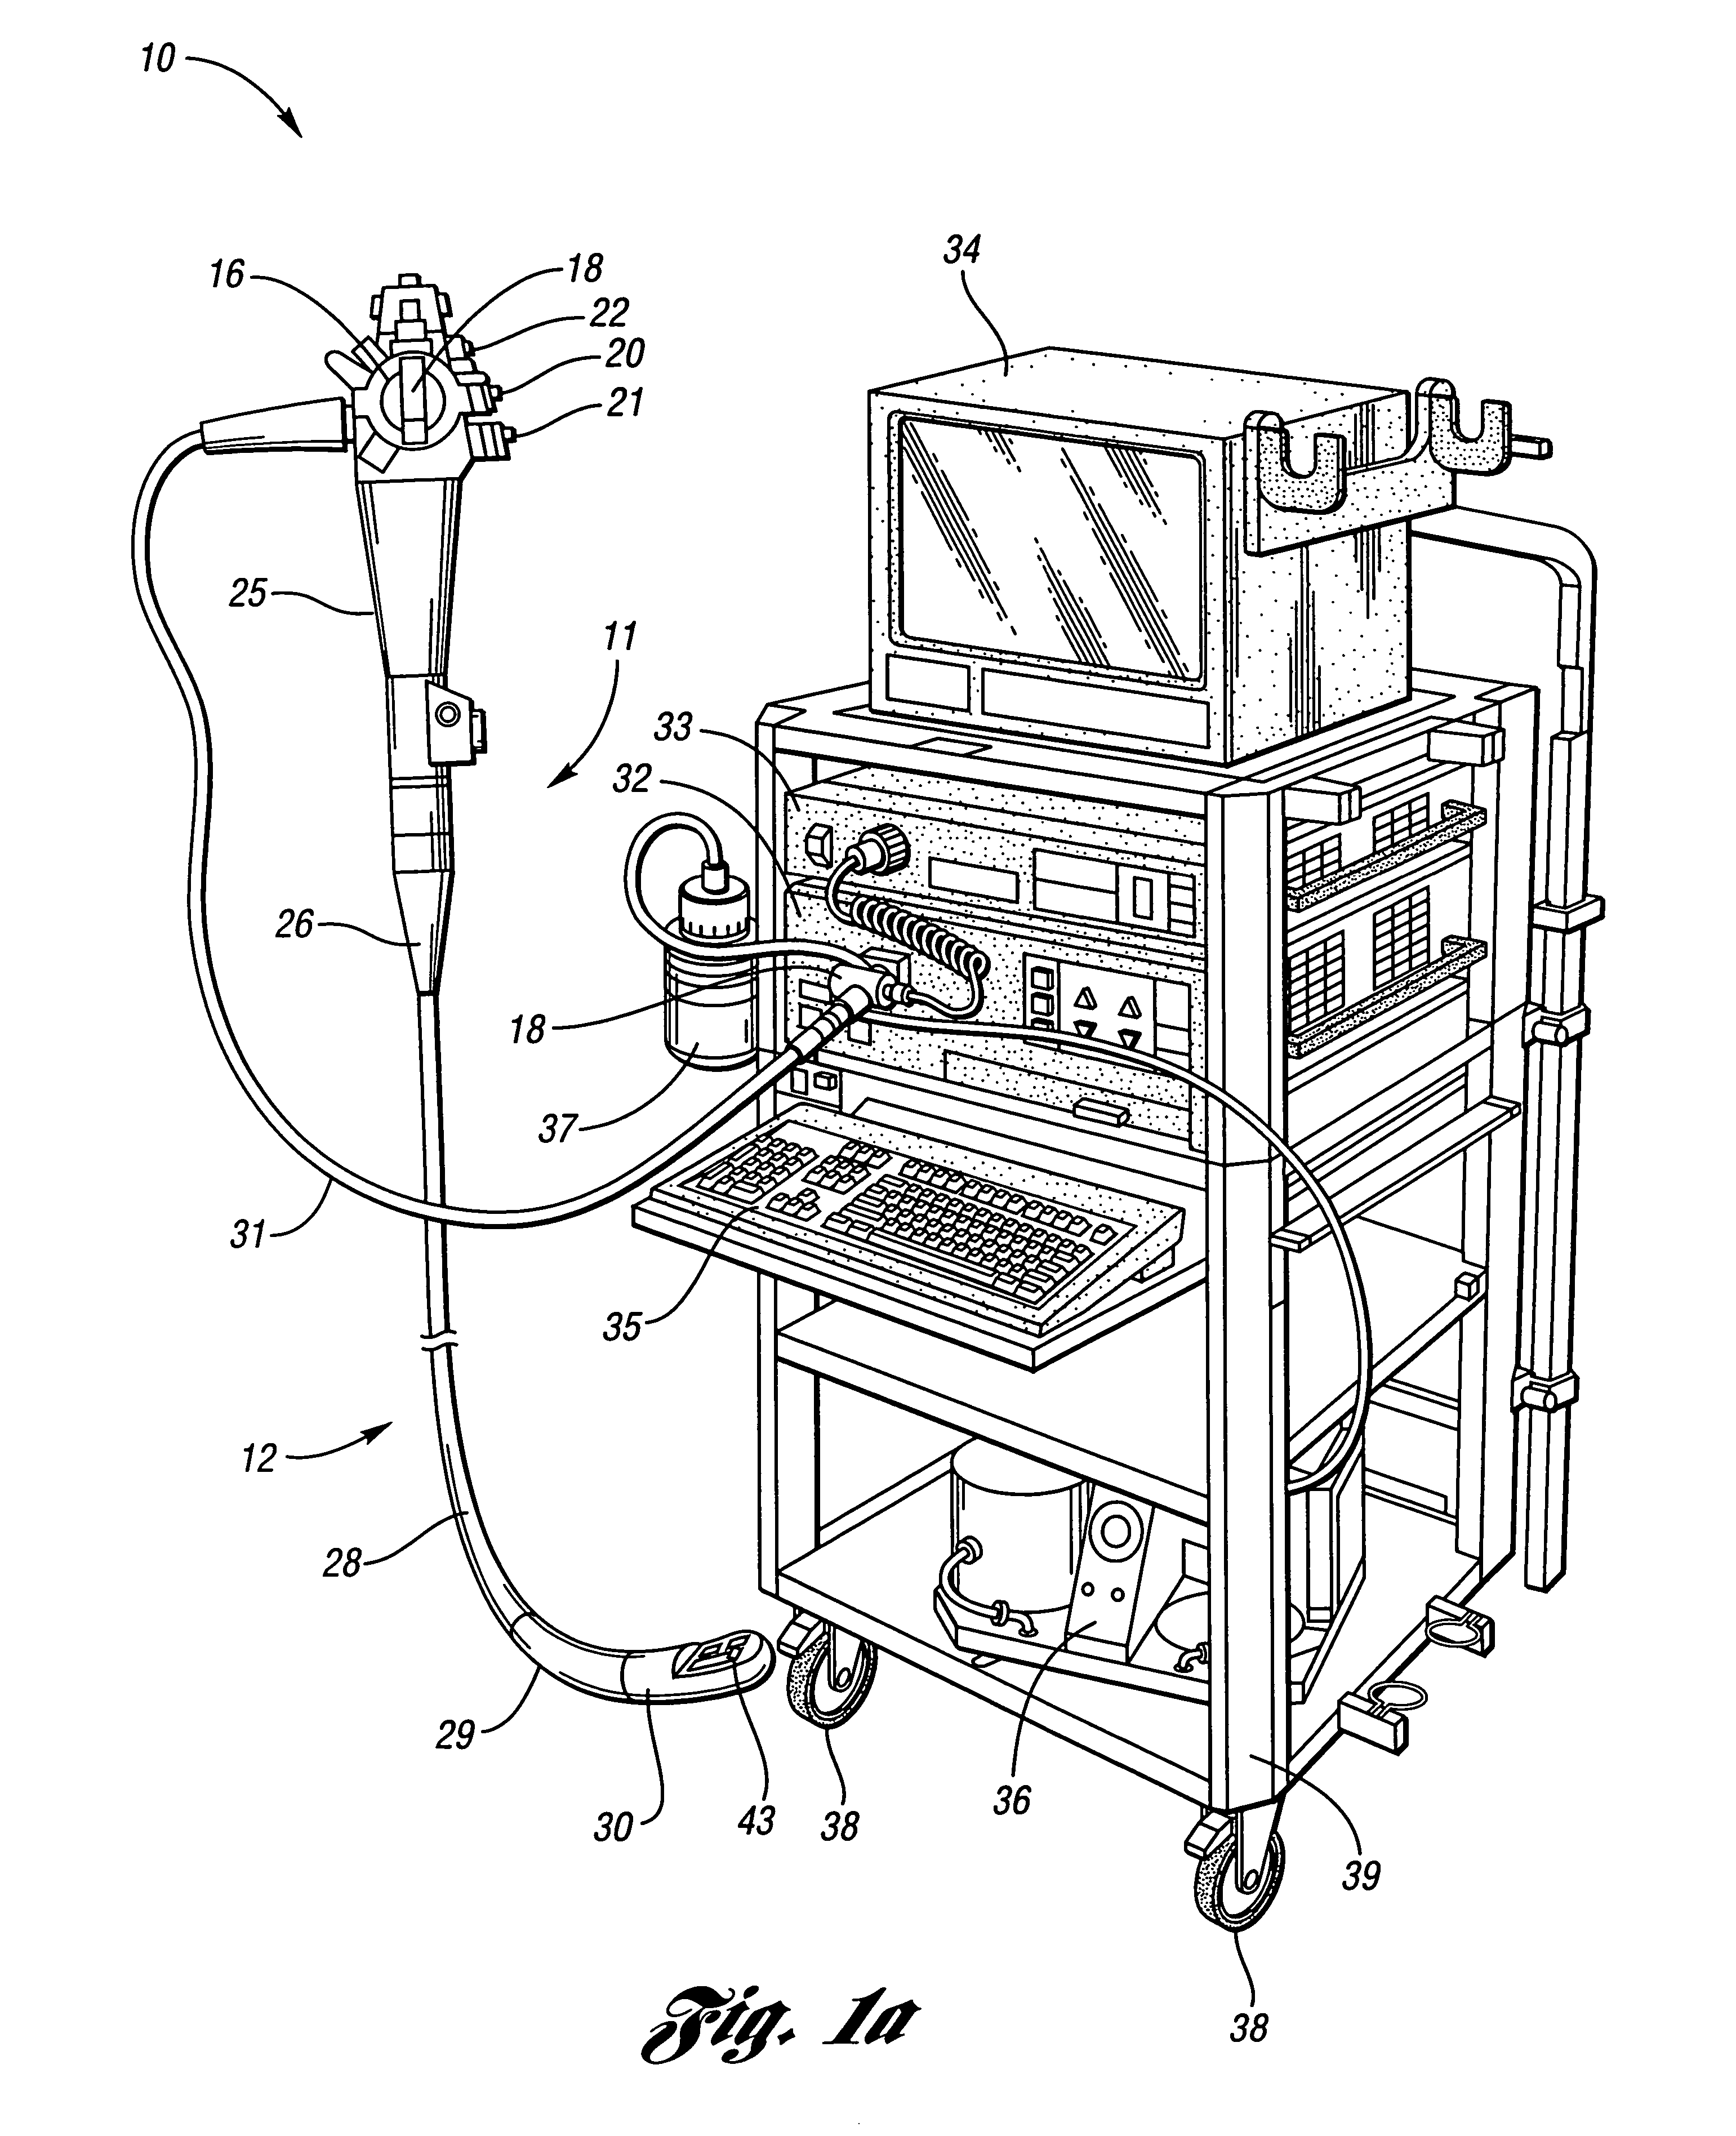 Endoscopic apparatus having an improved elevator